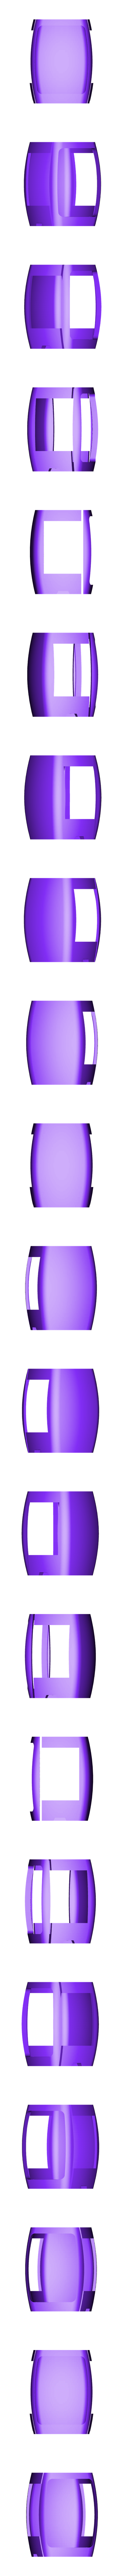 robo3D_white.STL Download free STL file Multi-Color Robo R2 USB Holder • Design to 3D print, MosaicManufacturing